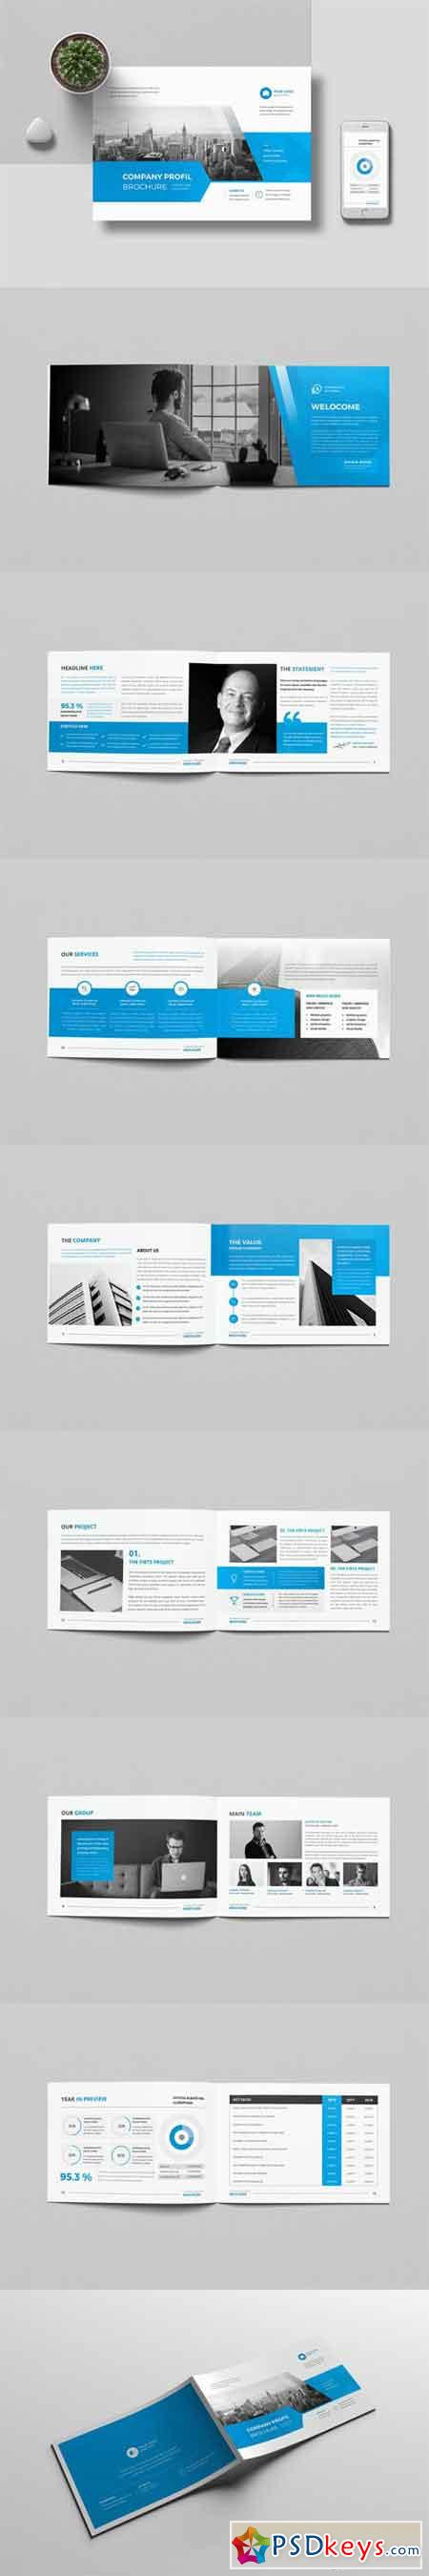 The Blue Corporate Brochure Landscape